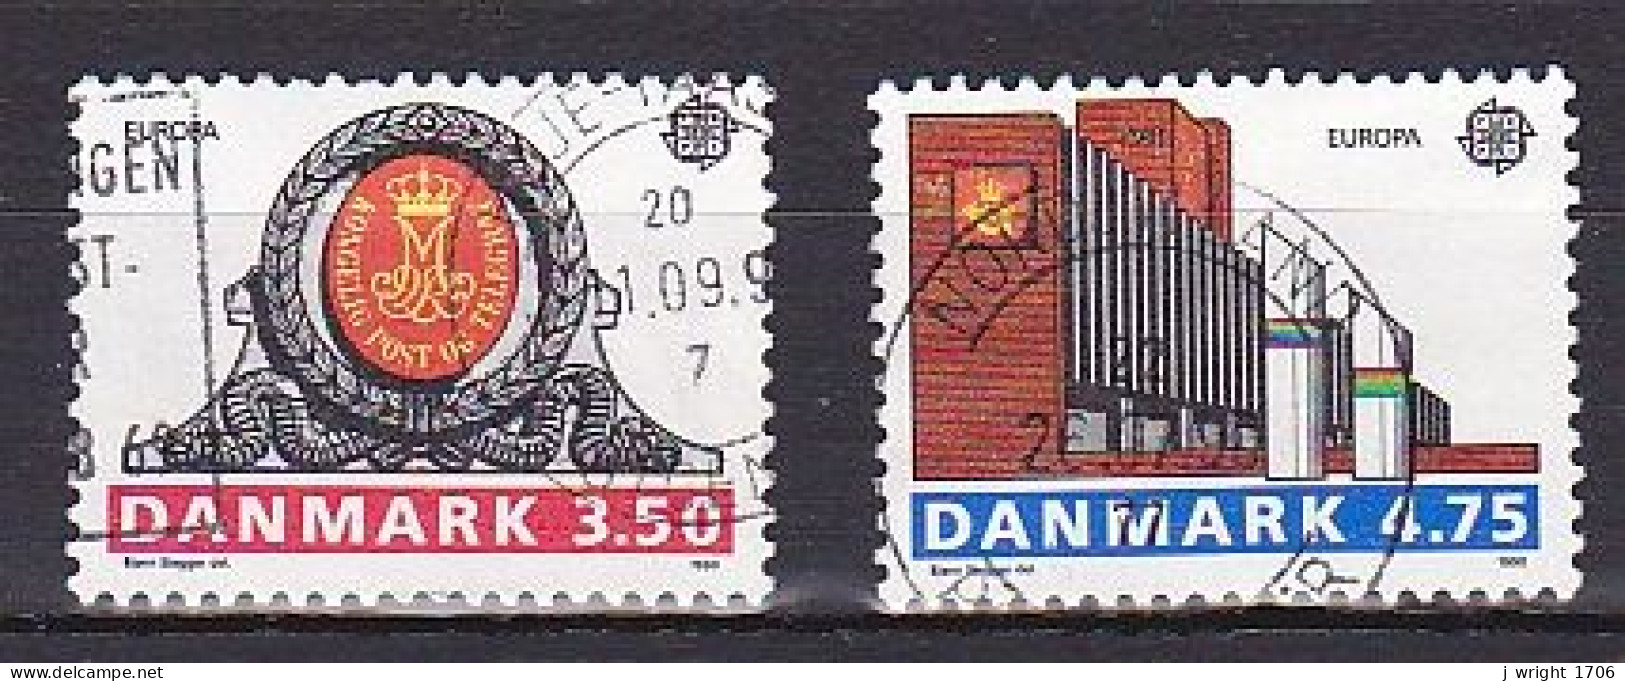 Denmark, 1990, Europa CEPT, Set, USED - Oblitérés